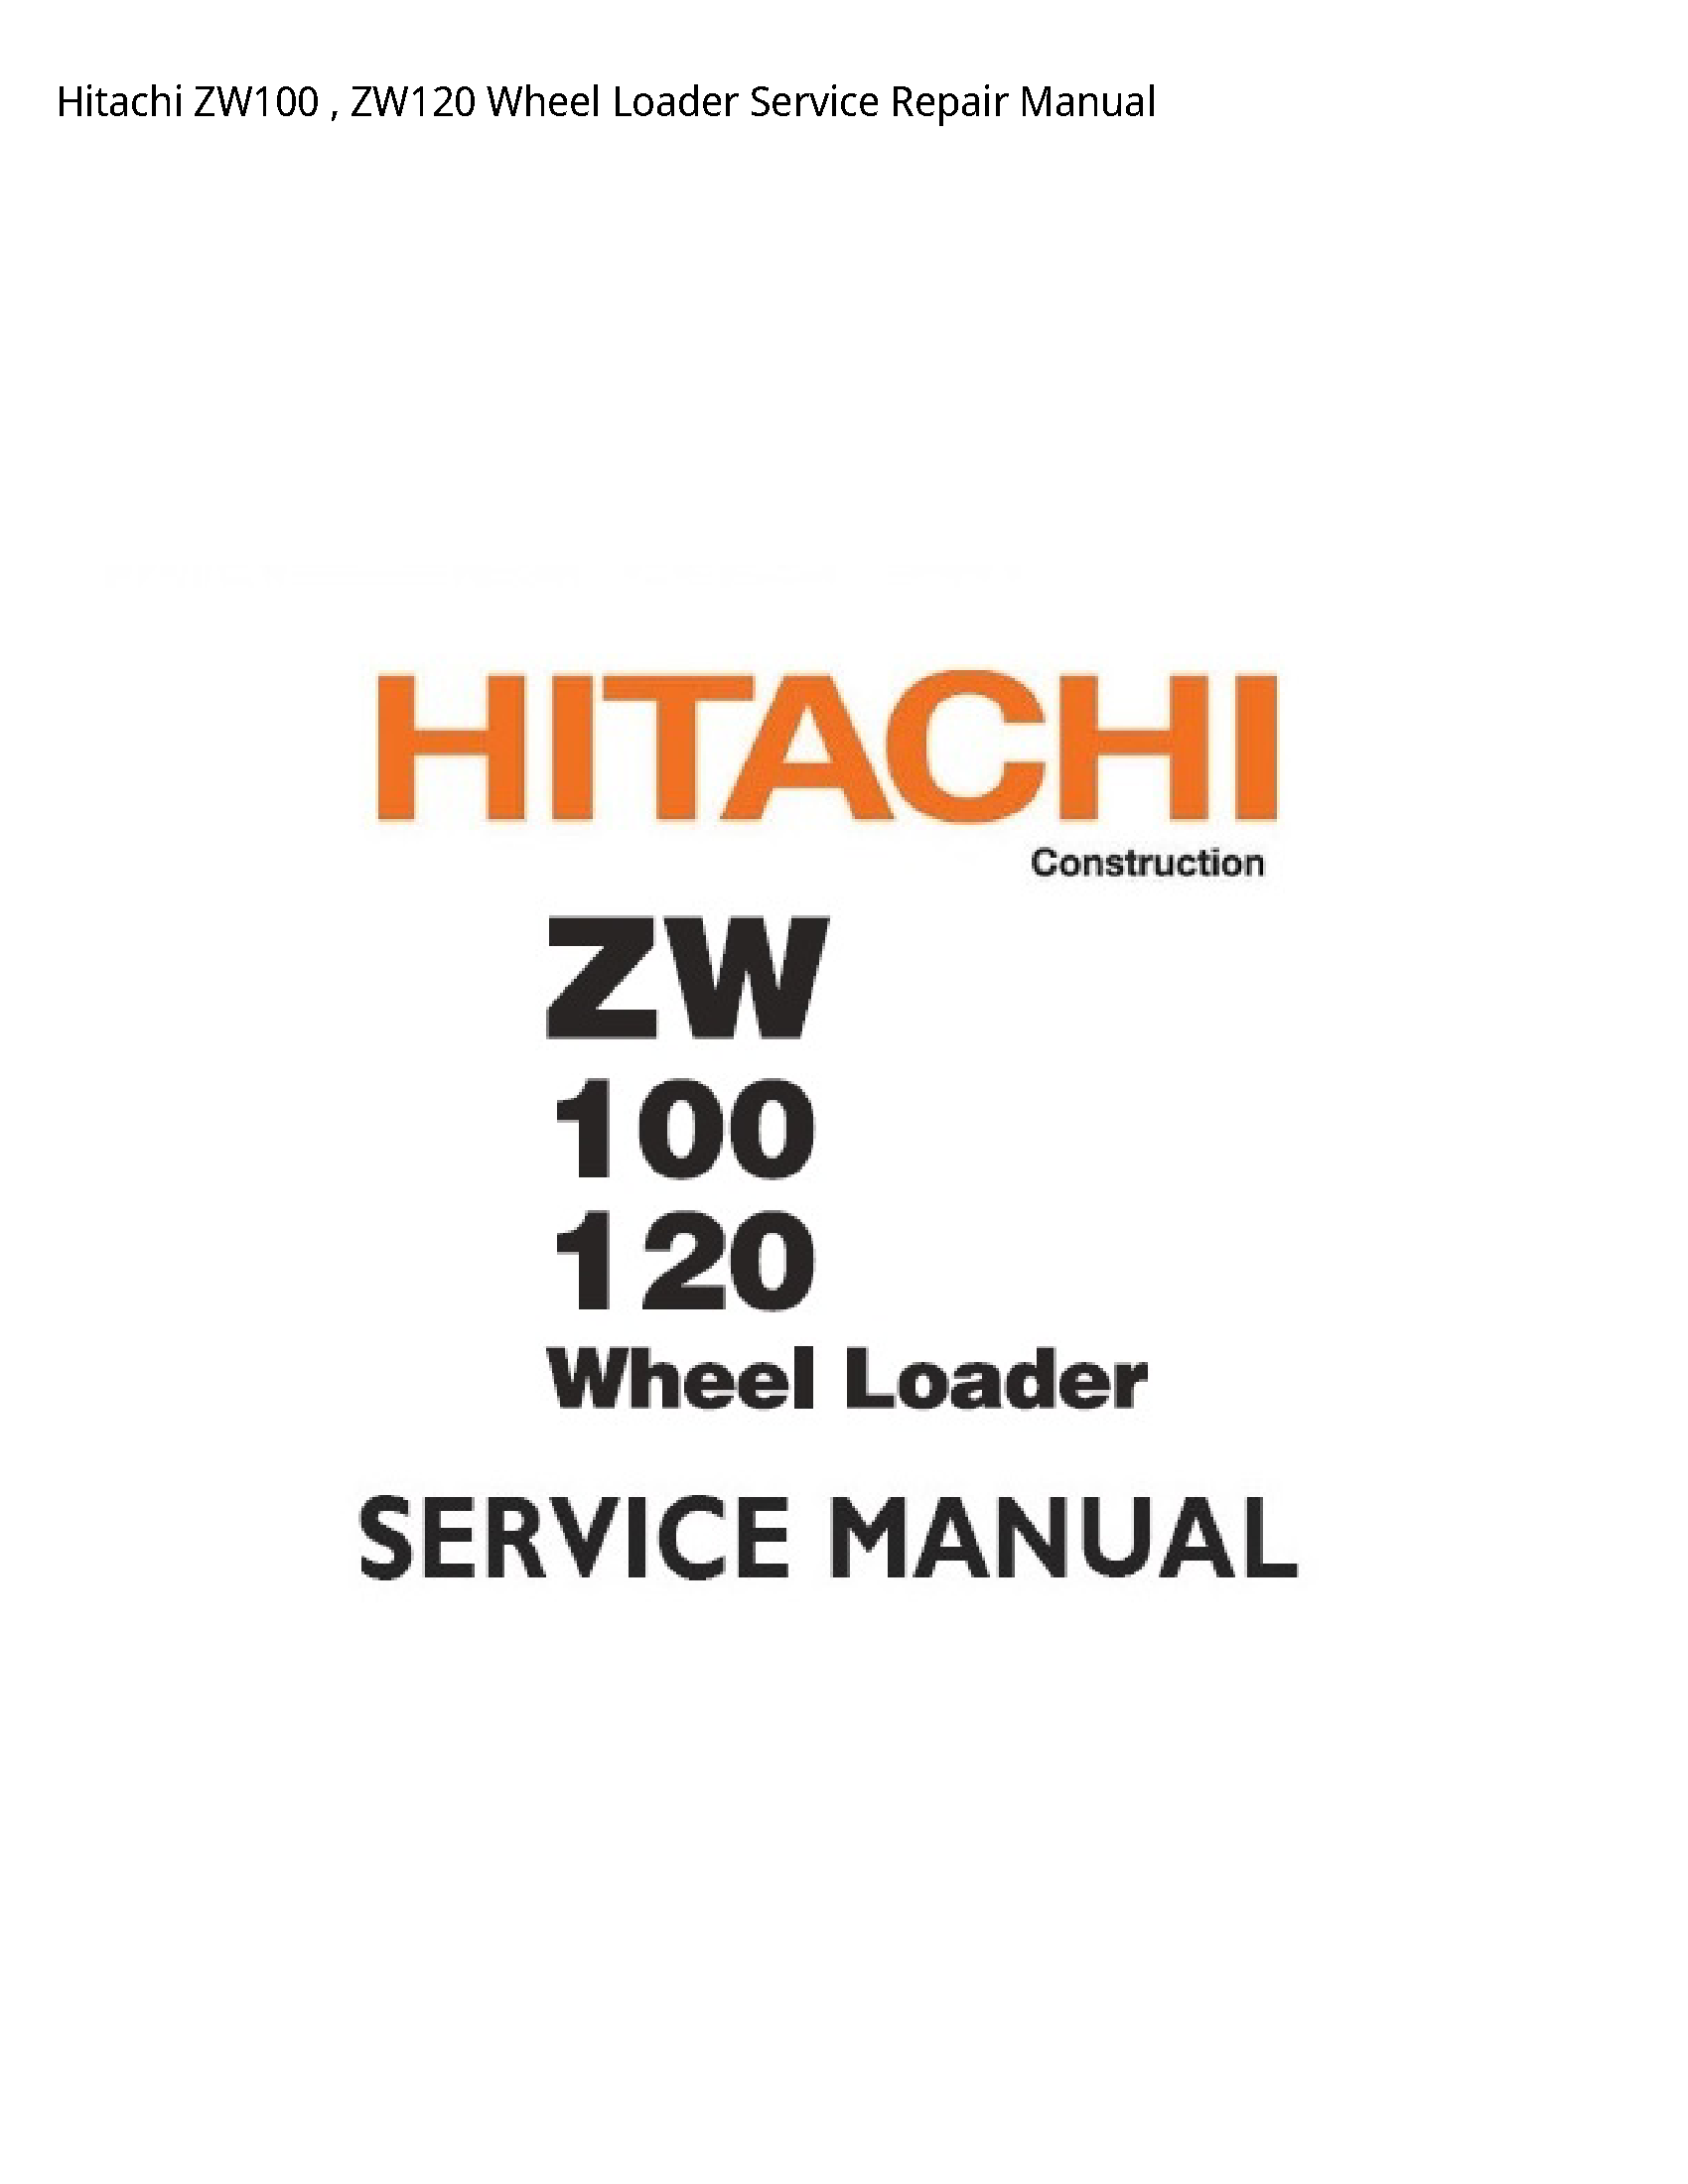 Hitachi ZW100 Wheel Loader manual